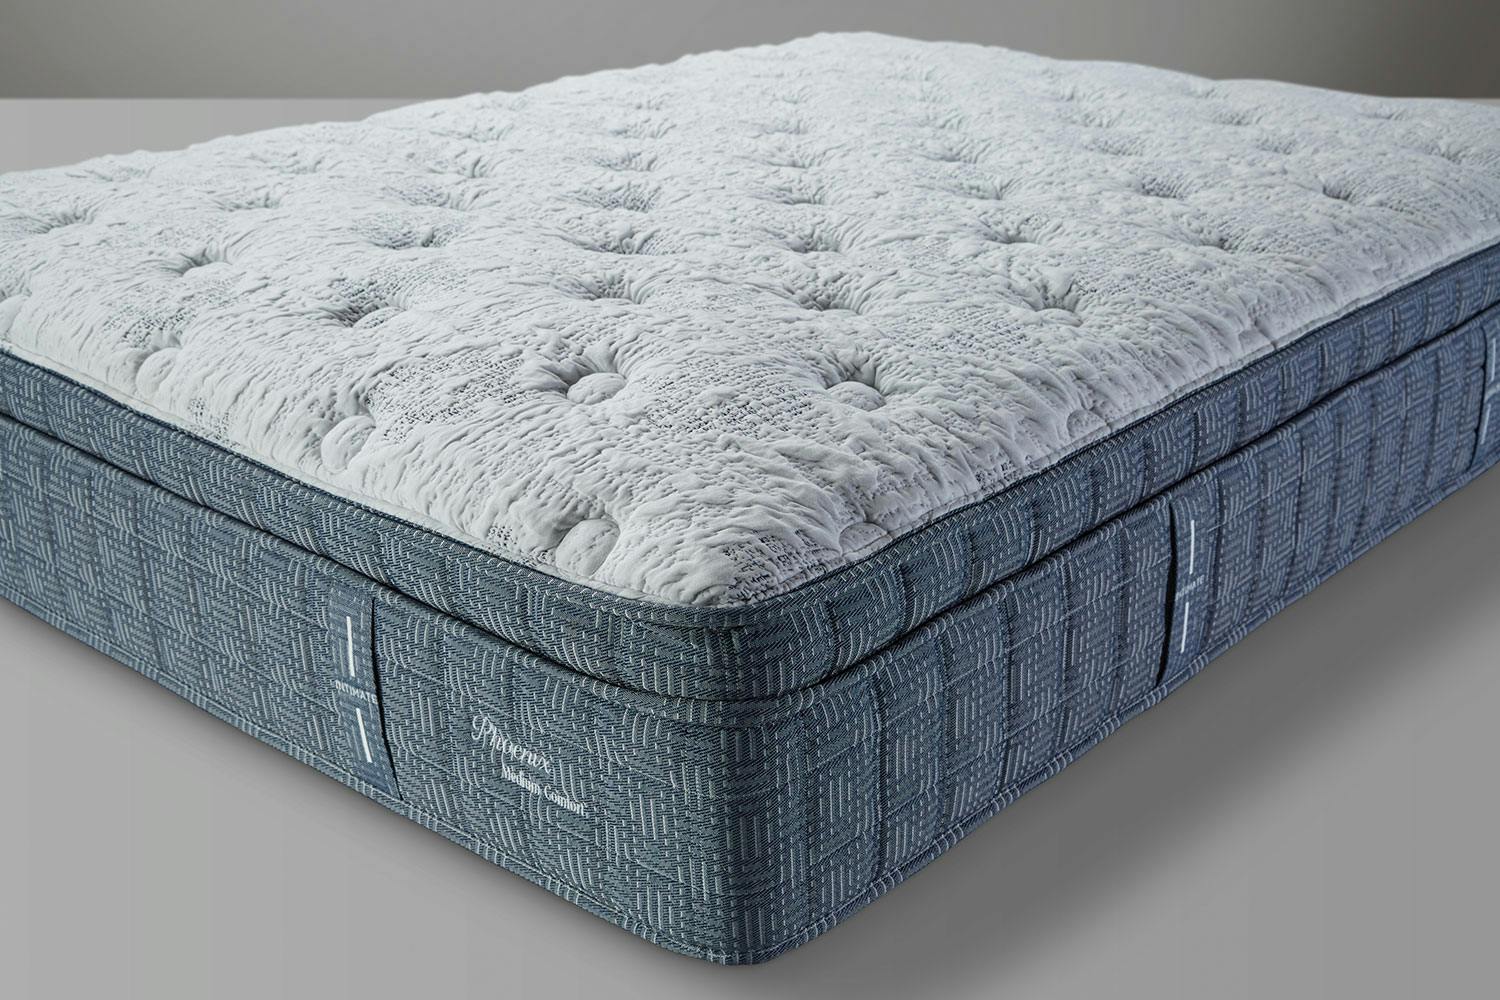 craigslist queen mattress for sale